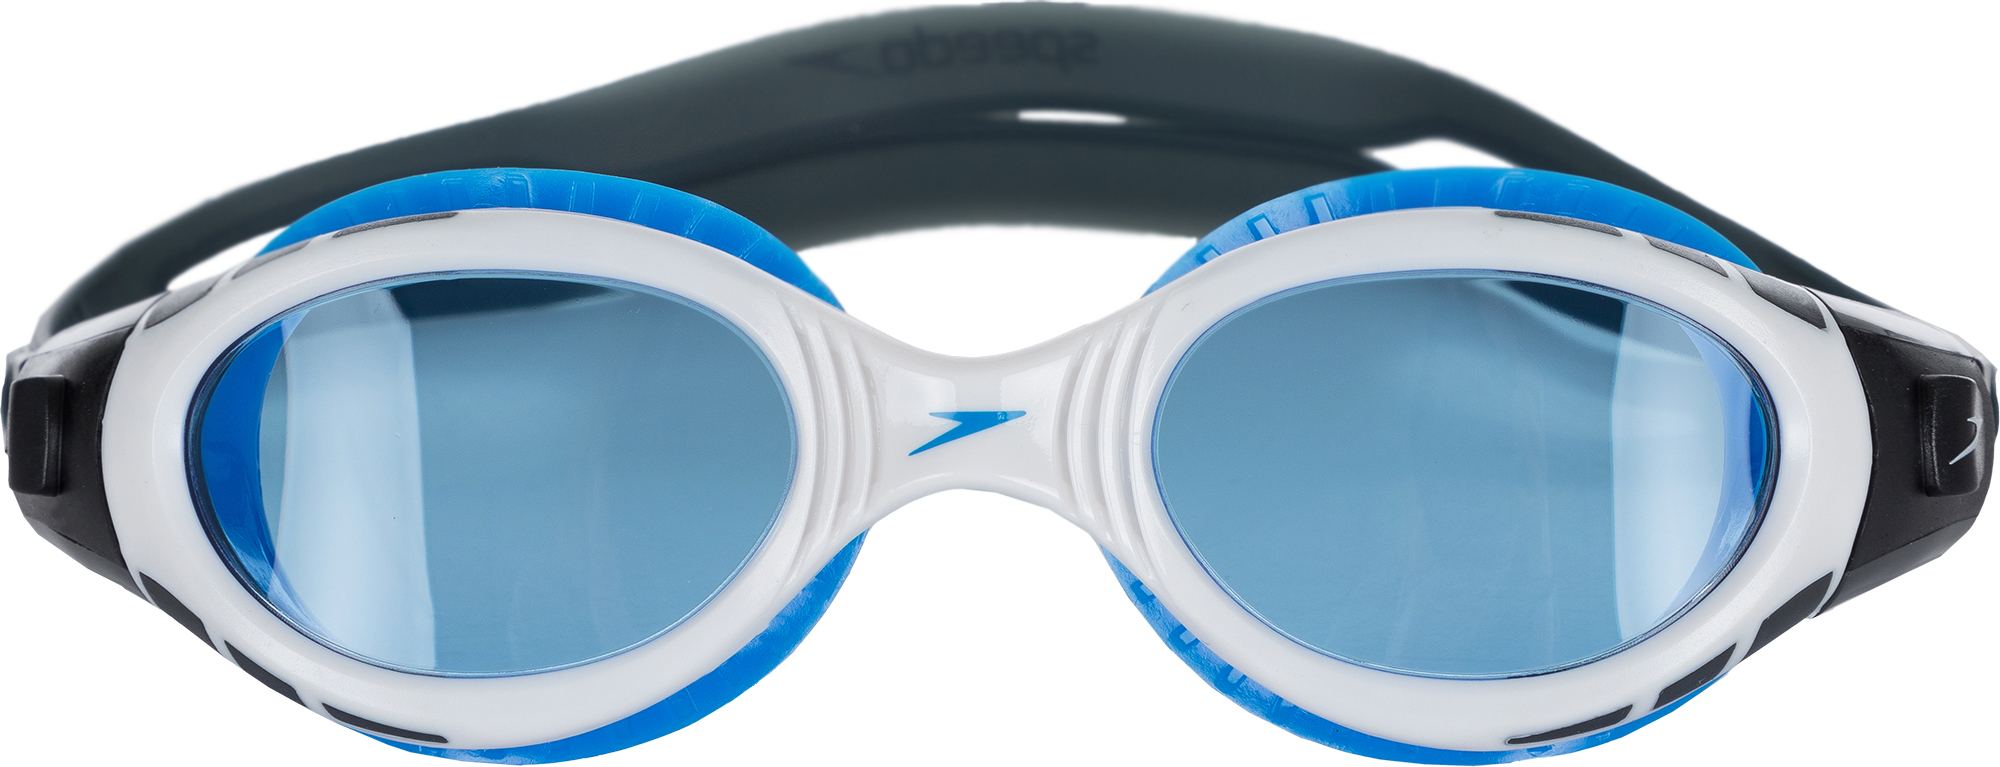 Очки для плавания Speedo Fut Biof